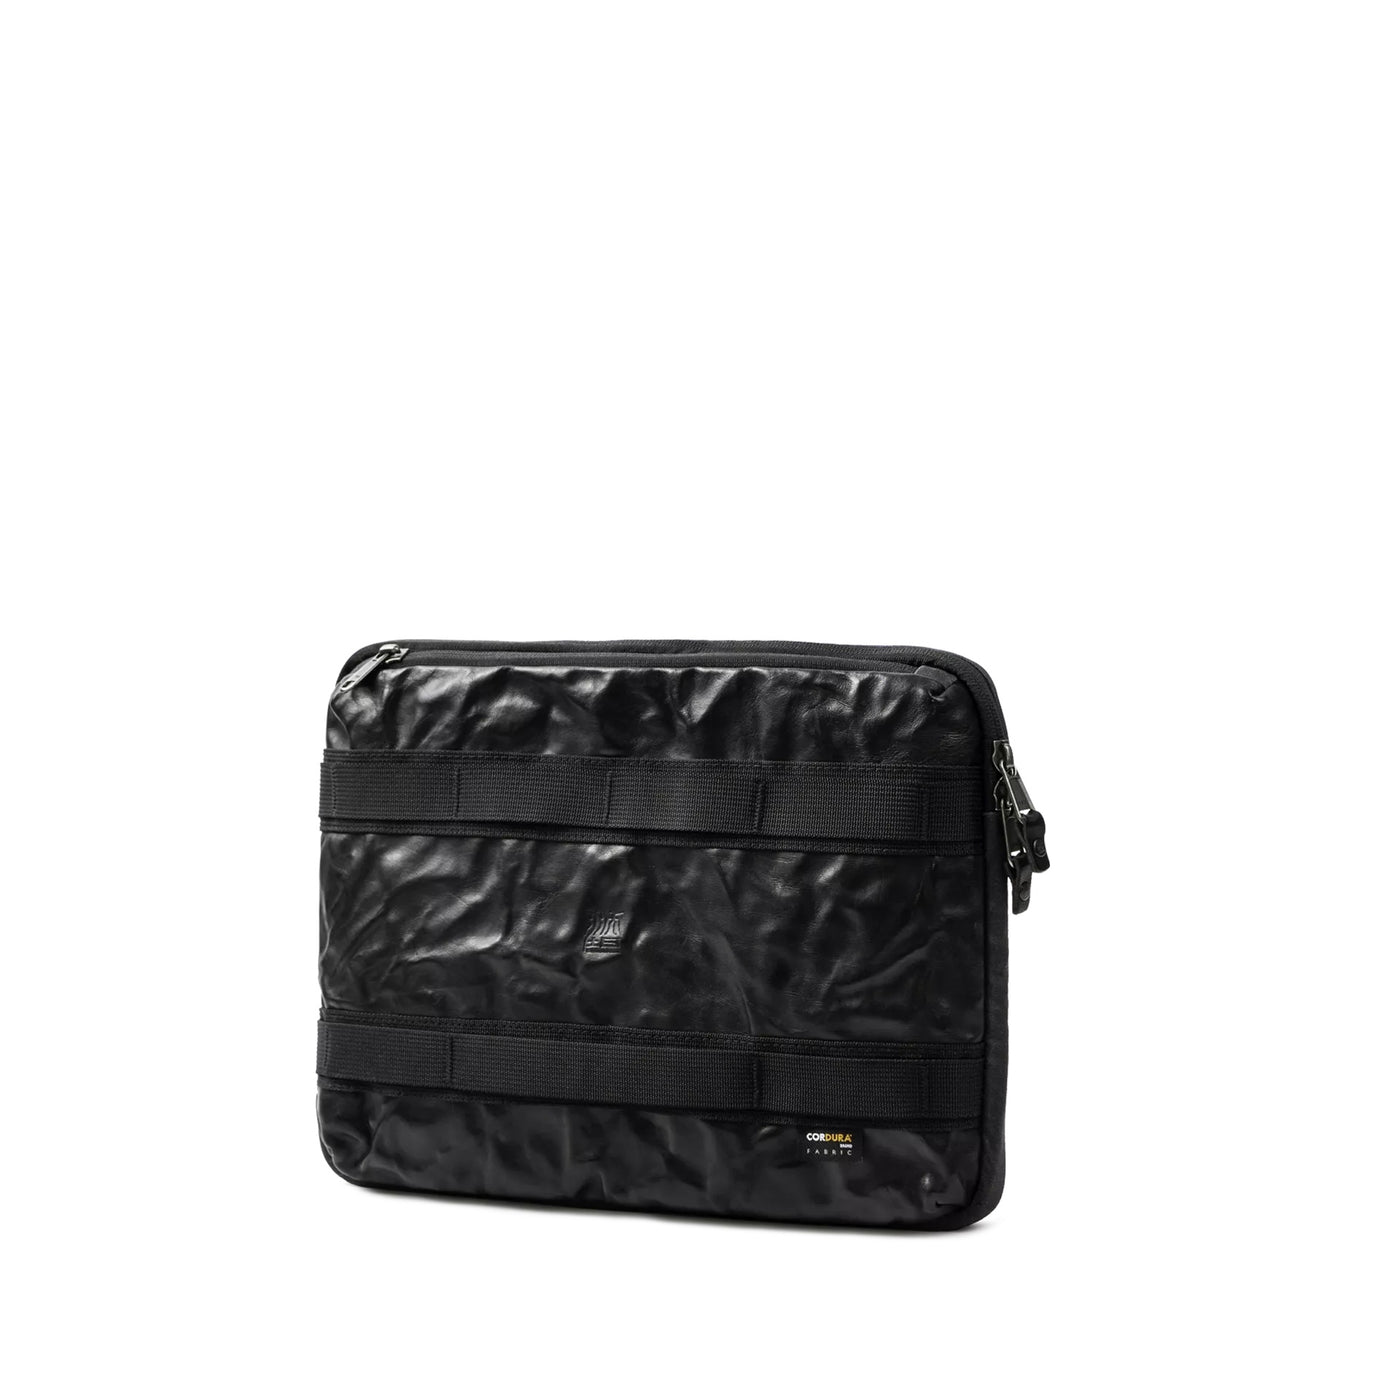 Urban Explorer Handheld/Shoulder Laptop Bag